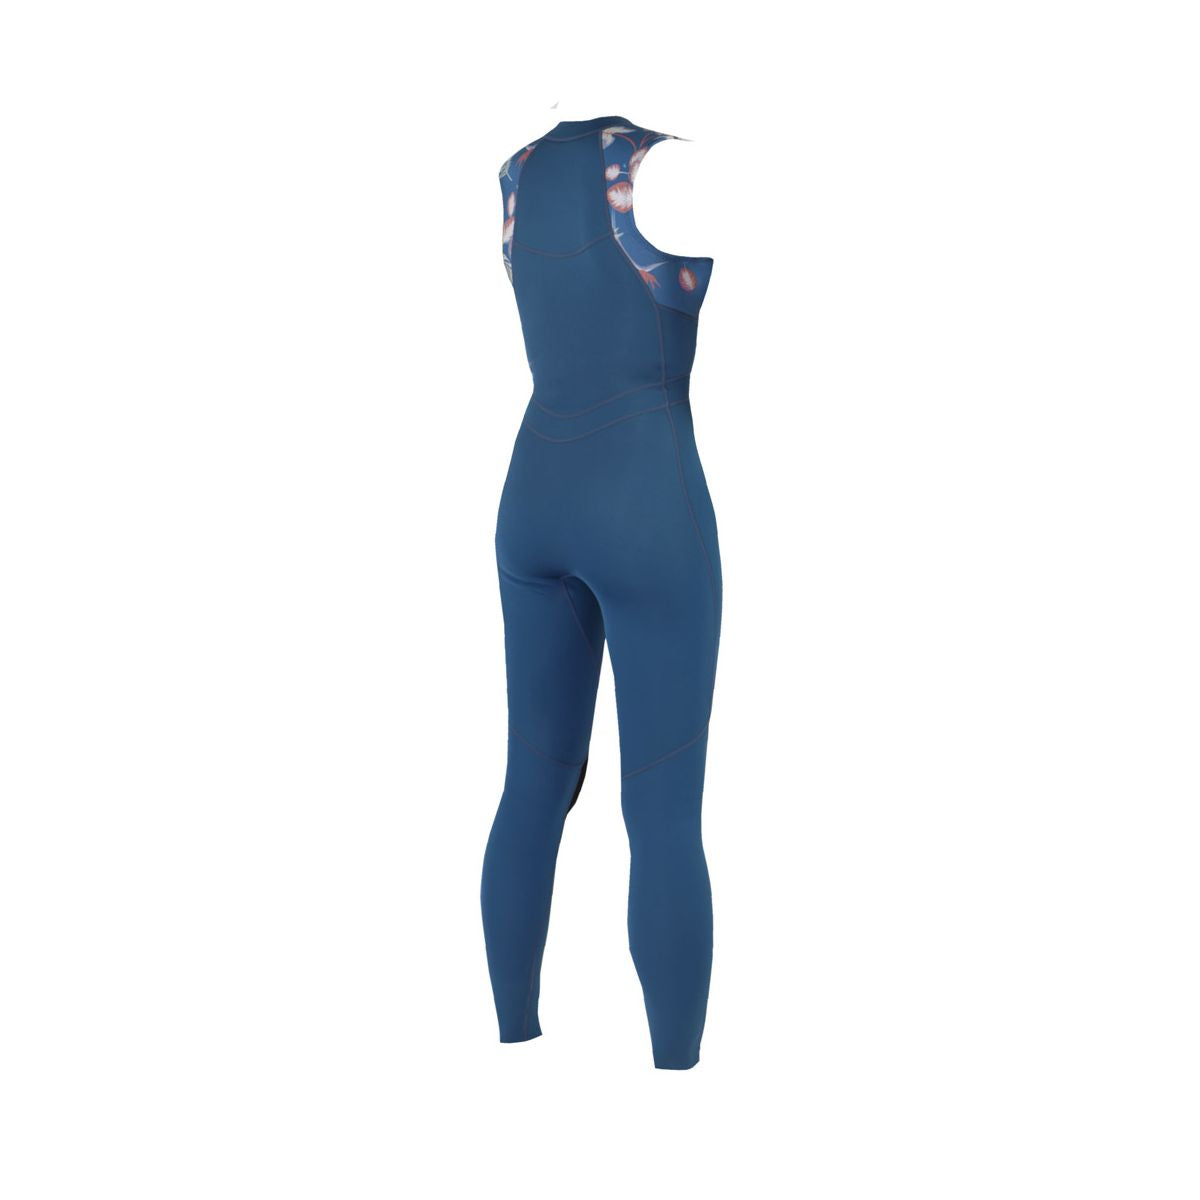 SOORUZ LongJohn Women 2/2 DIVINE חליפת גלישה לונג ג'ון לנשים בעובי 2 מ"מ בצבע כחול 2023